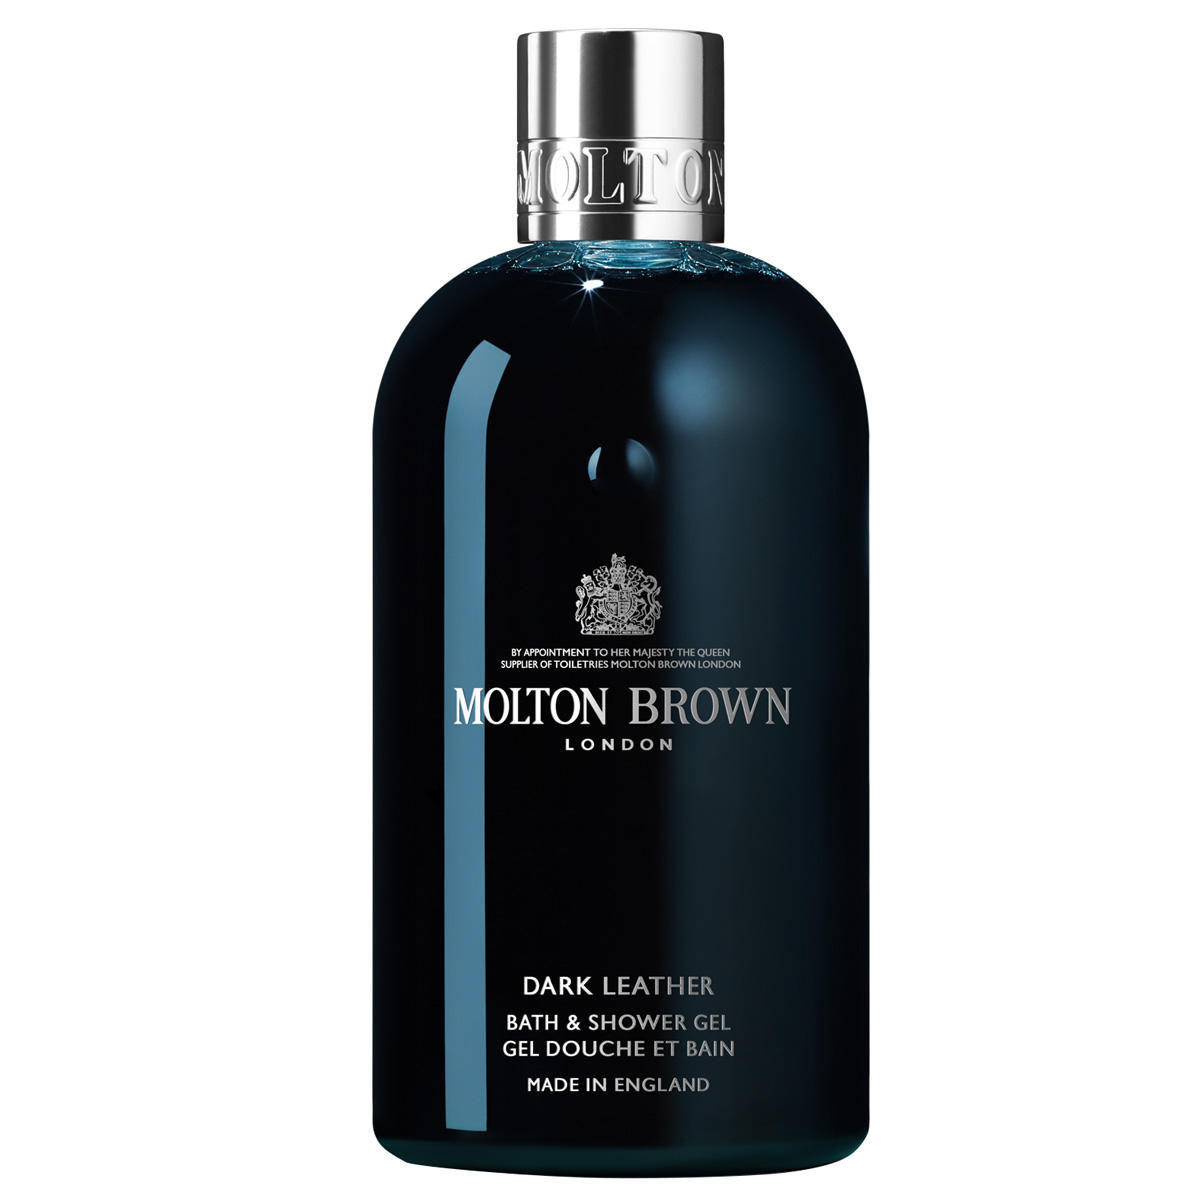 MOLTON BROWN Dark Leather Bath & Shower Gel 300 ml - 1